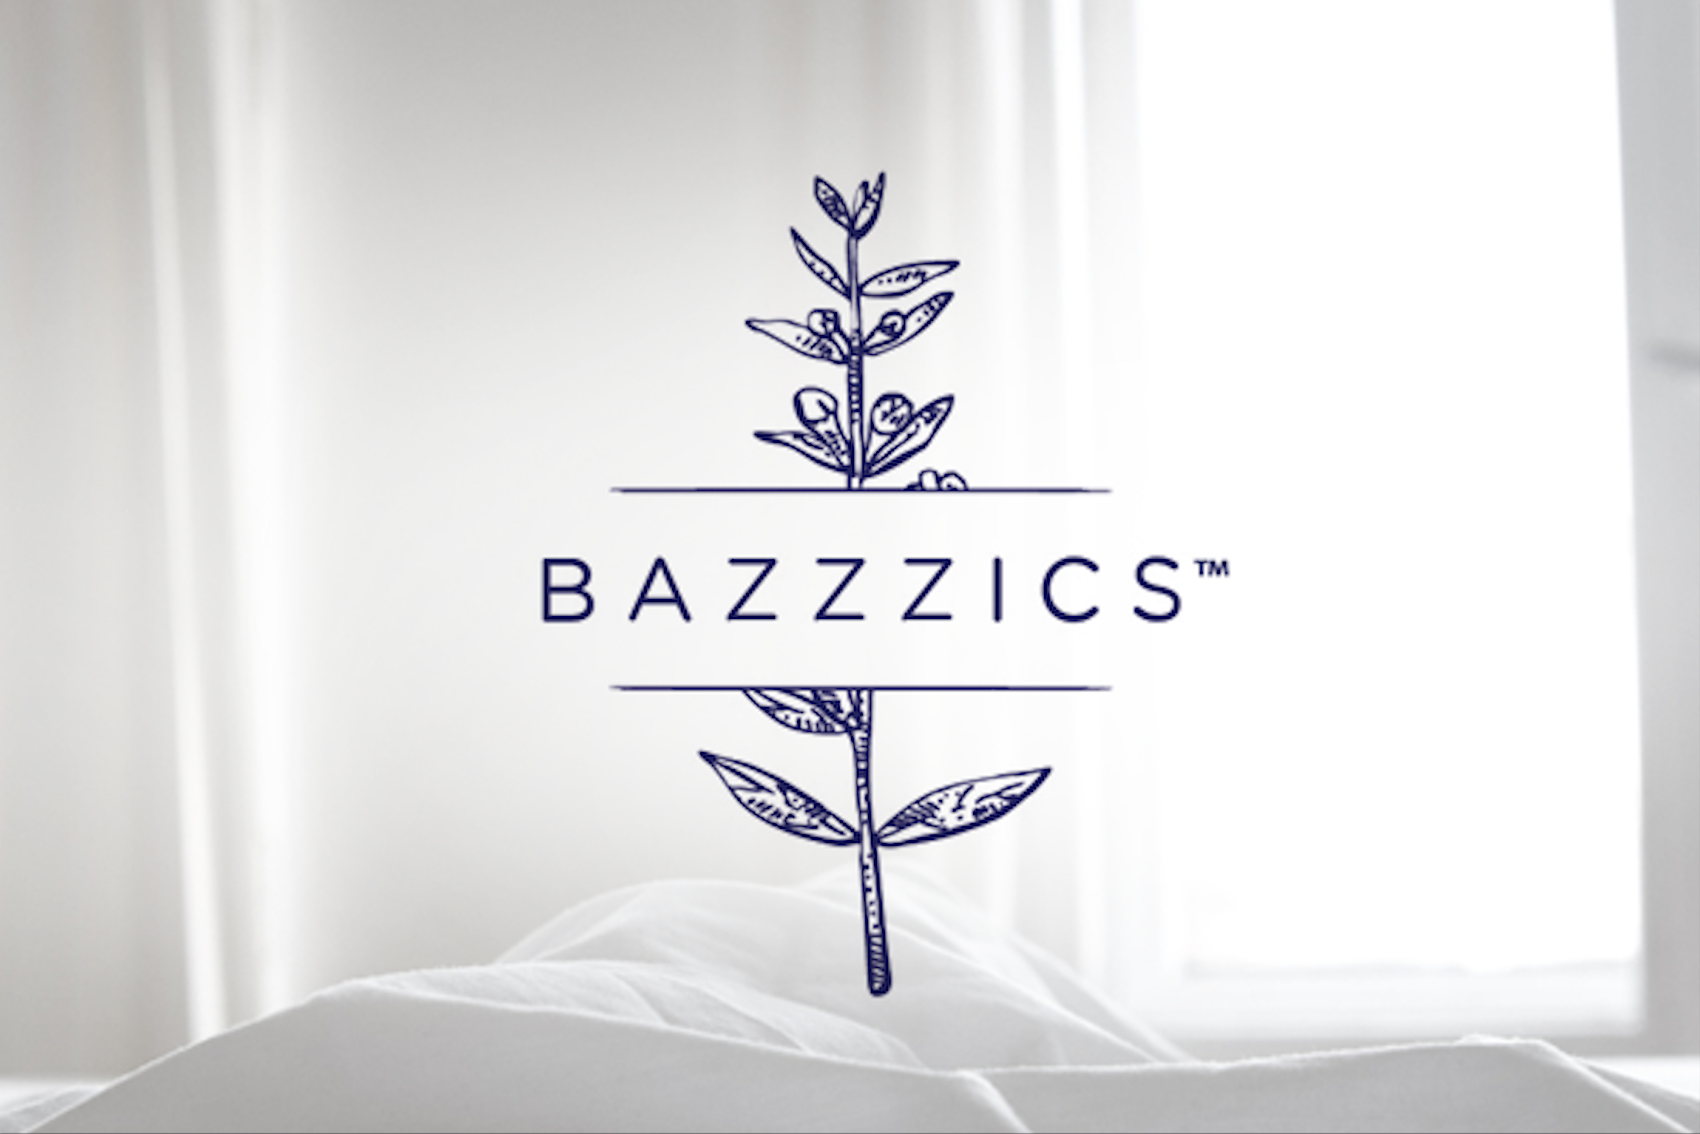 Bazzzics Natural Sleep Aids